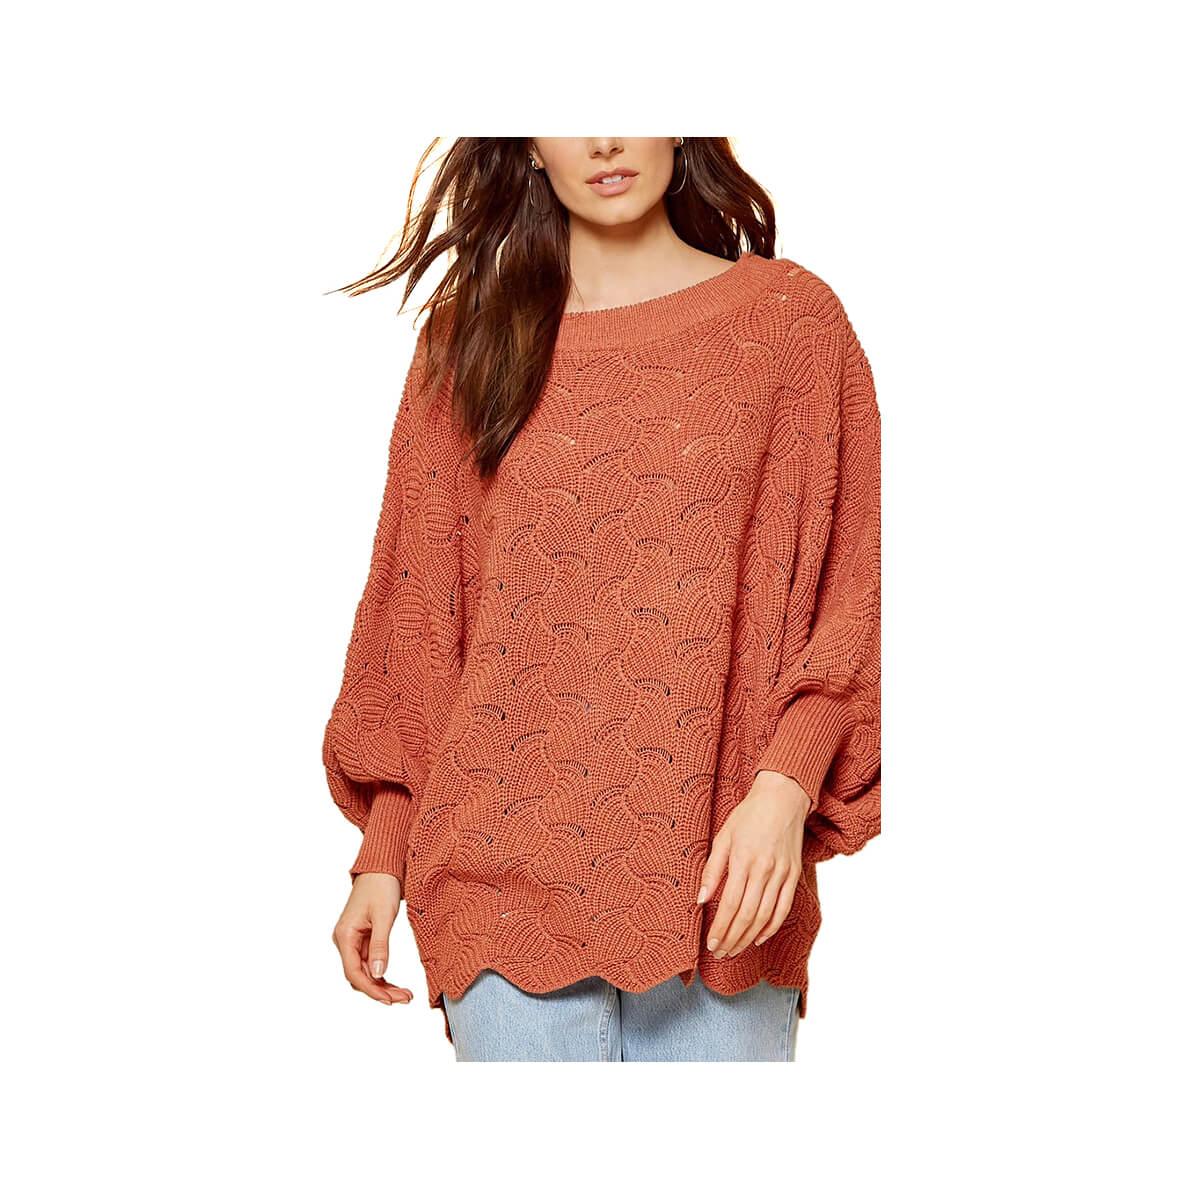  Women's Patterned Pointelle Solid Long Sleeve Sweater